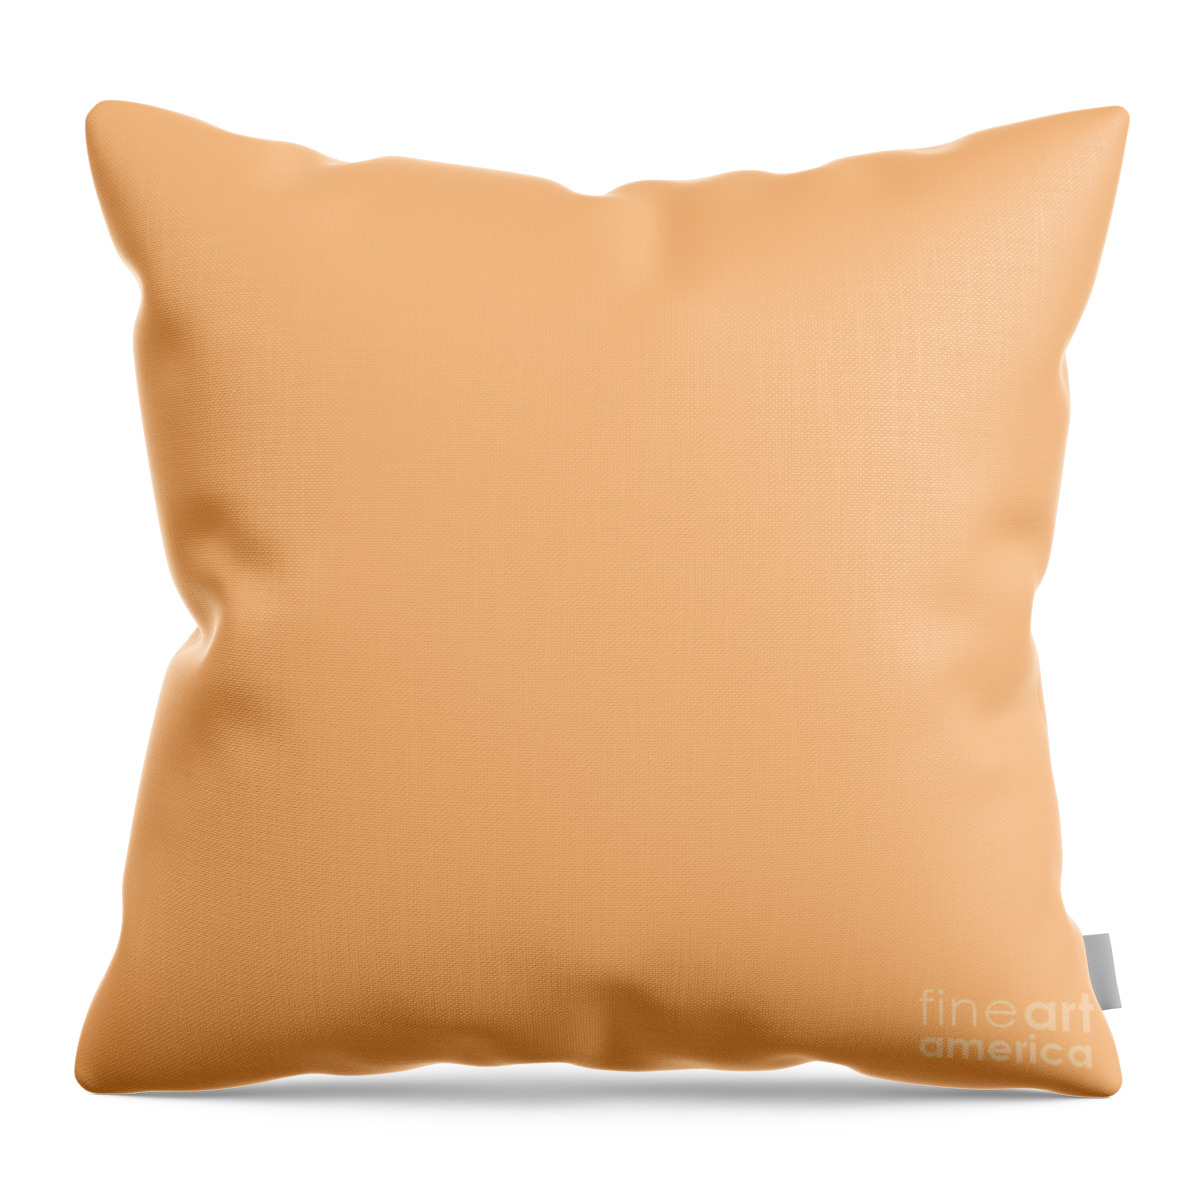 Peach Throw Pillow featuring the digital art Peach Orange Solid Color by Delynn Addams for Interior Home Decor by Delynn Addams